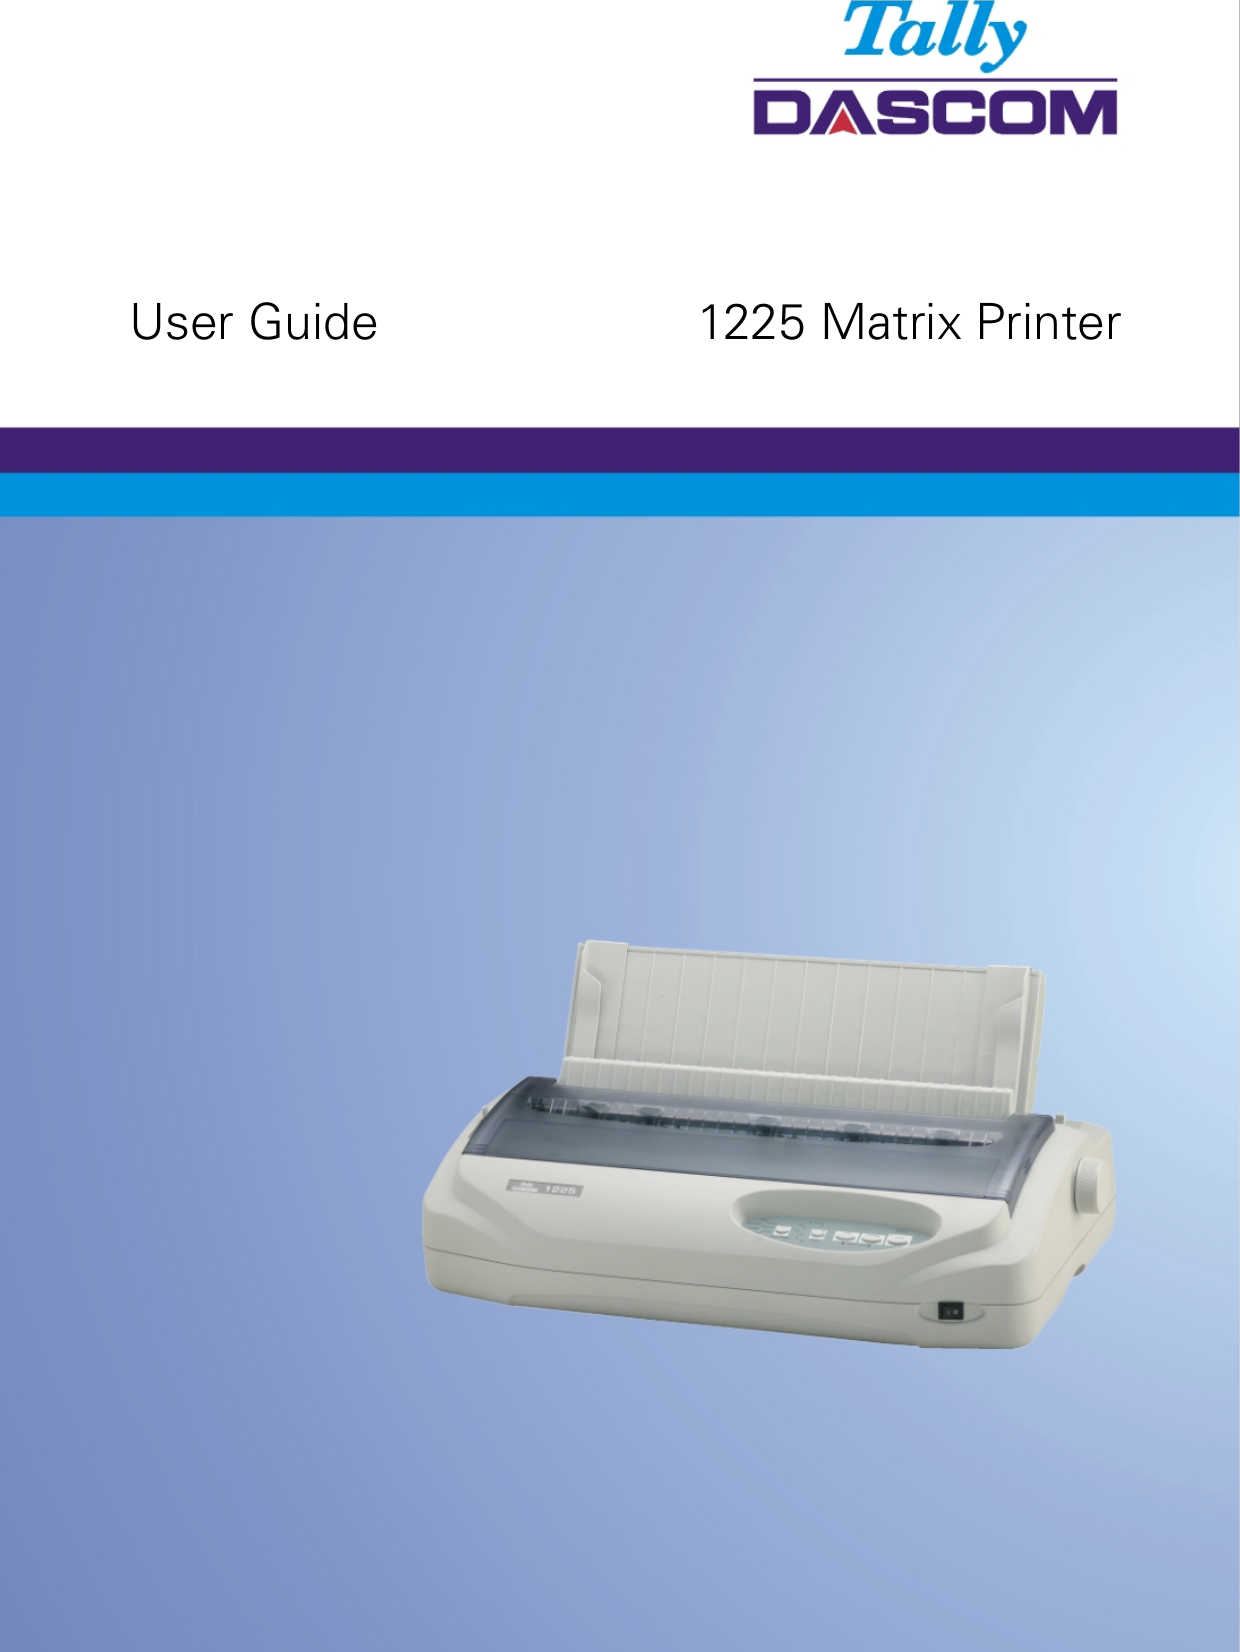      User Guide        1225 Matrix Printer 